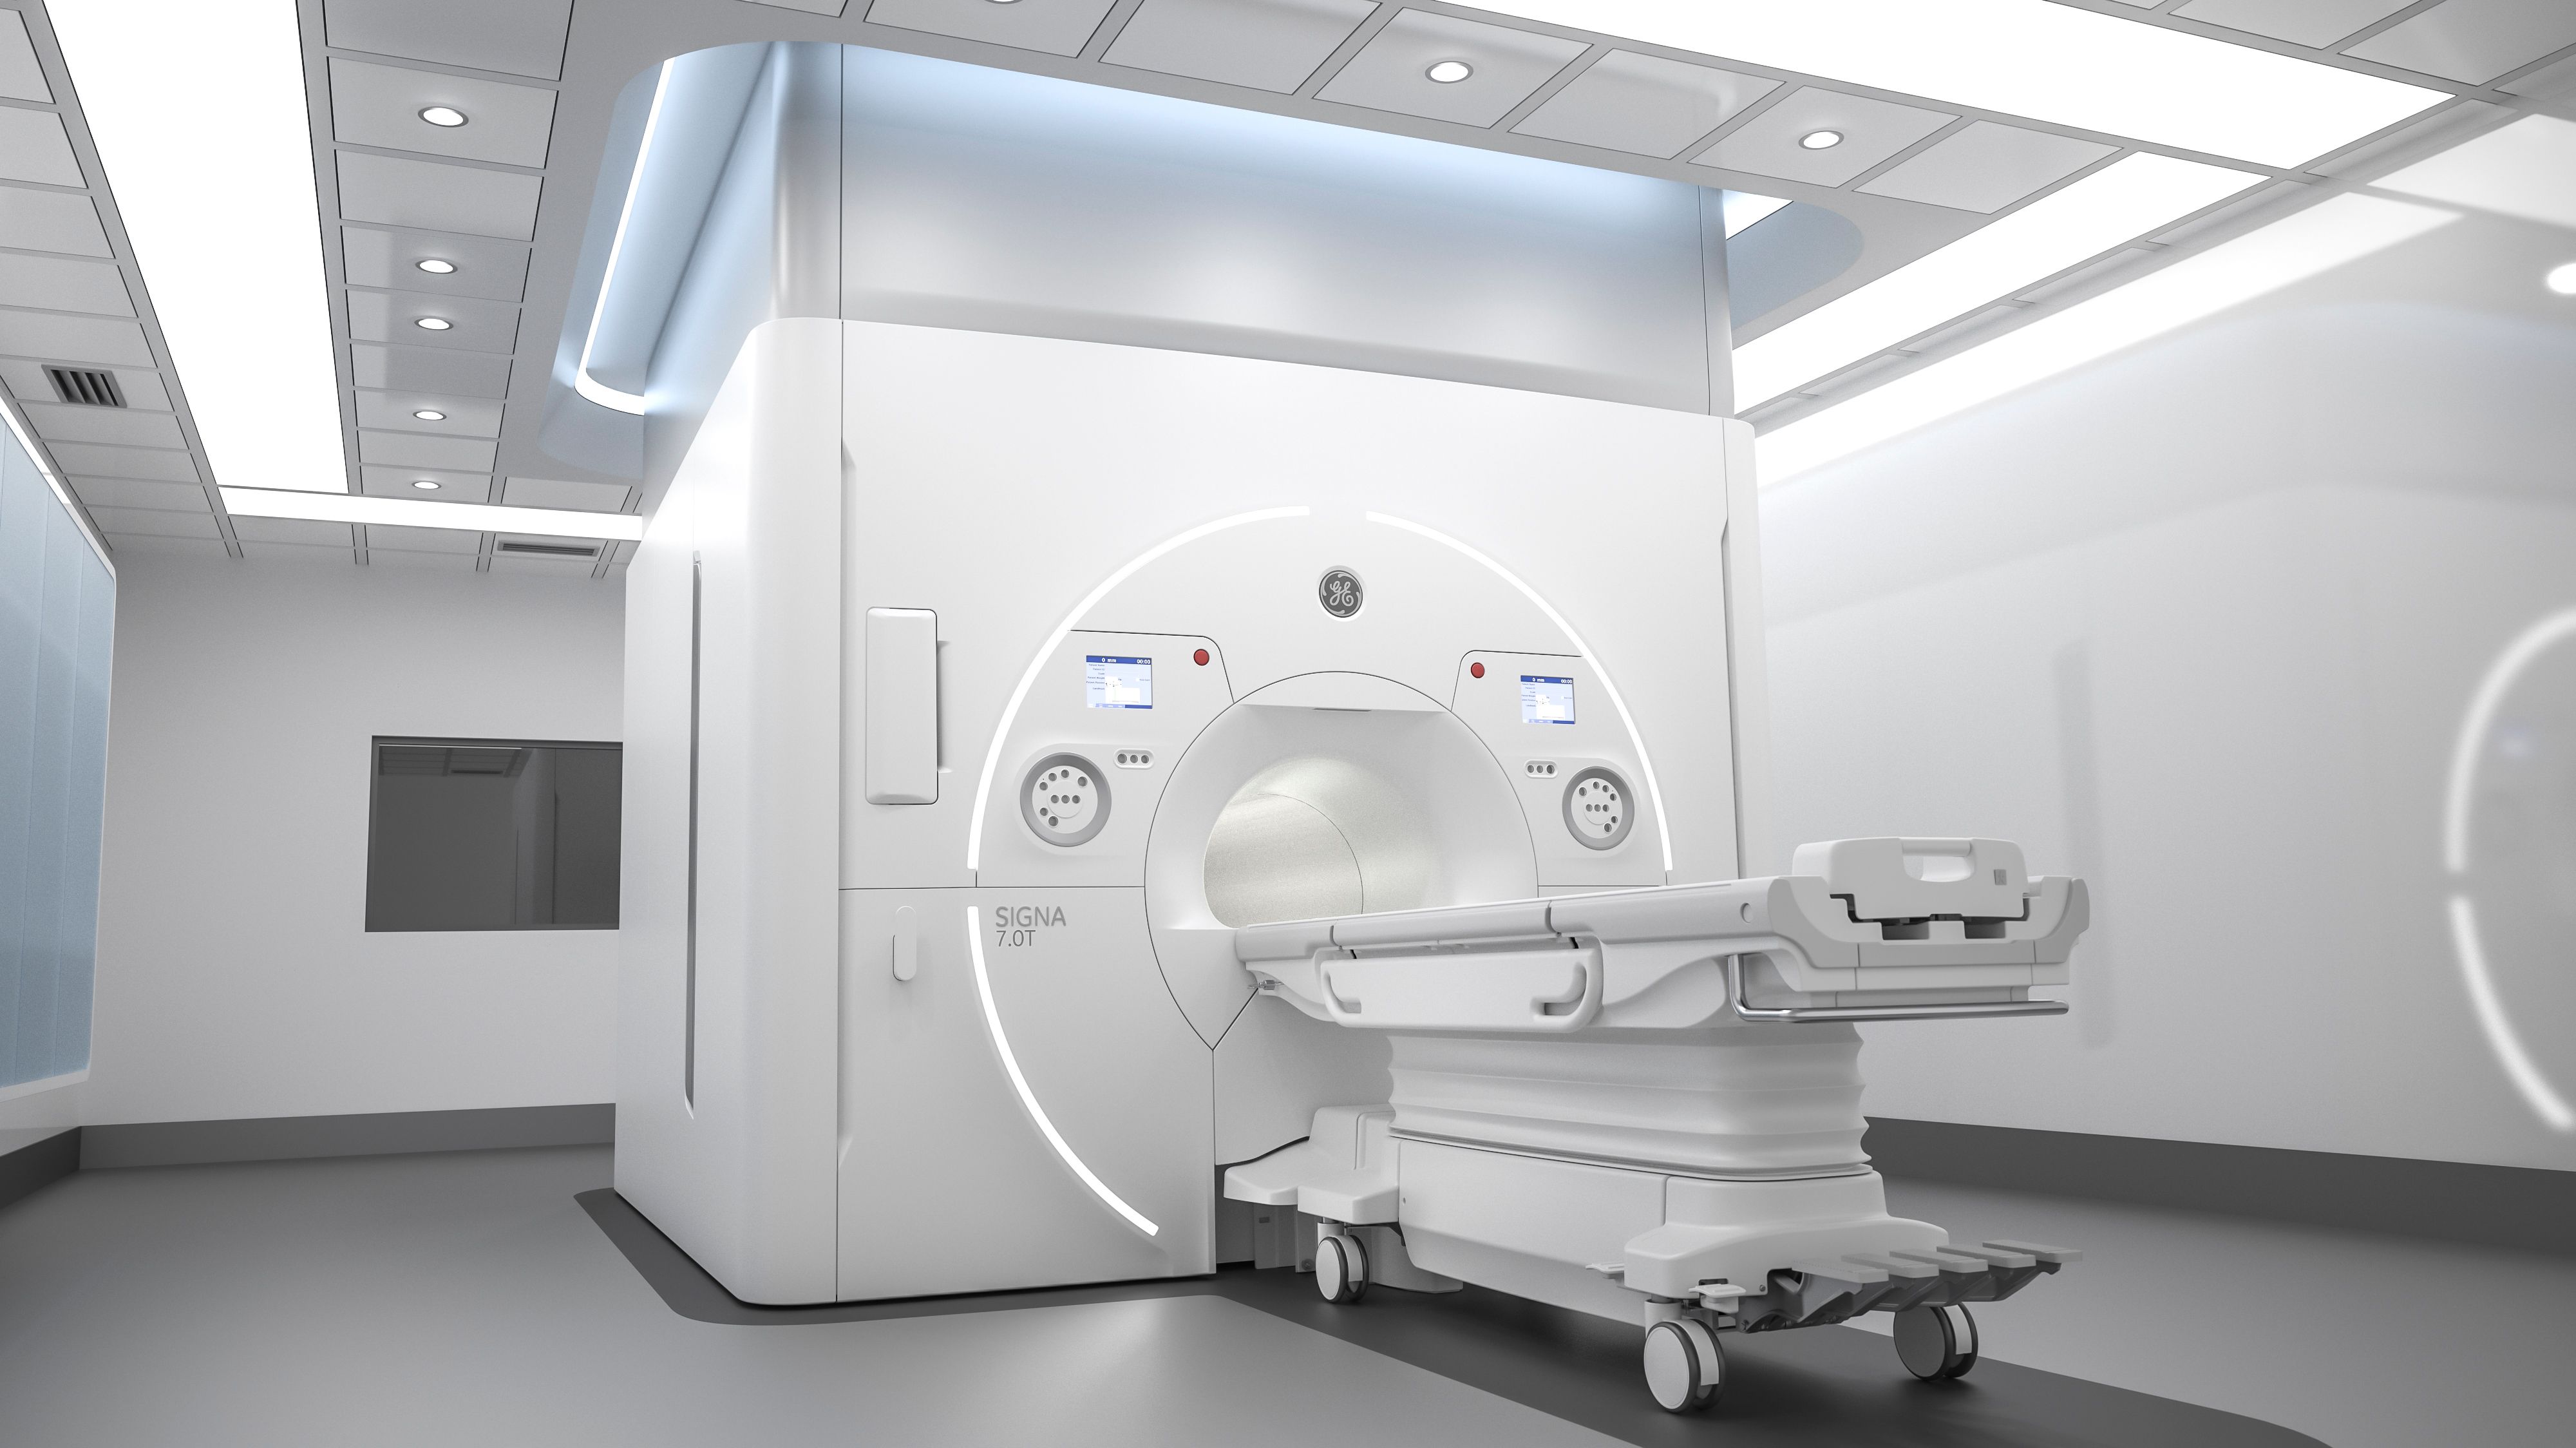 GE’s 7T MRI Scanner Wins FDA Clearance